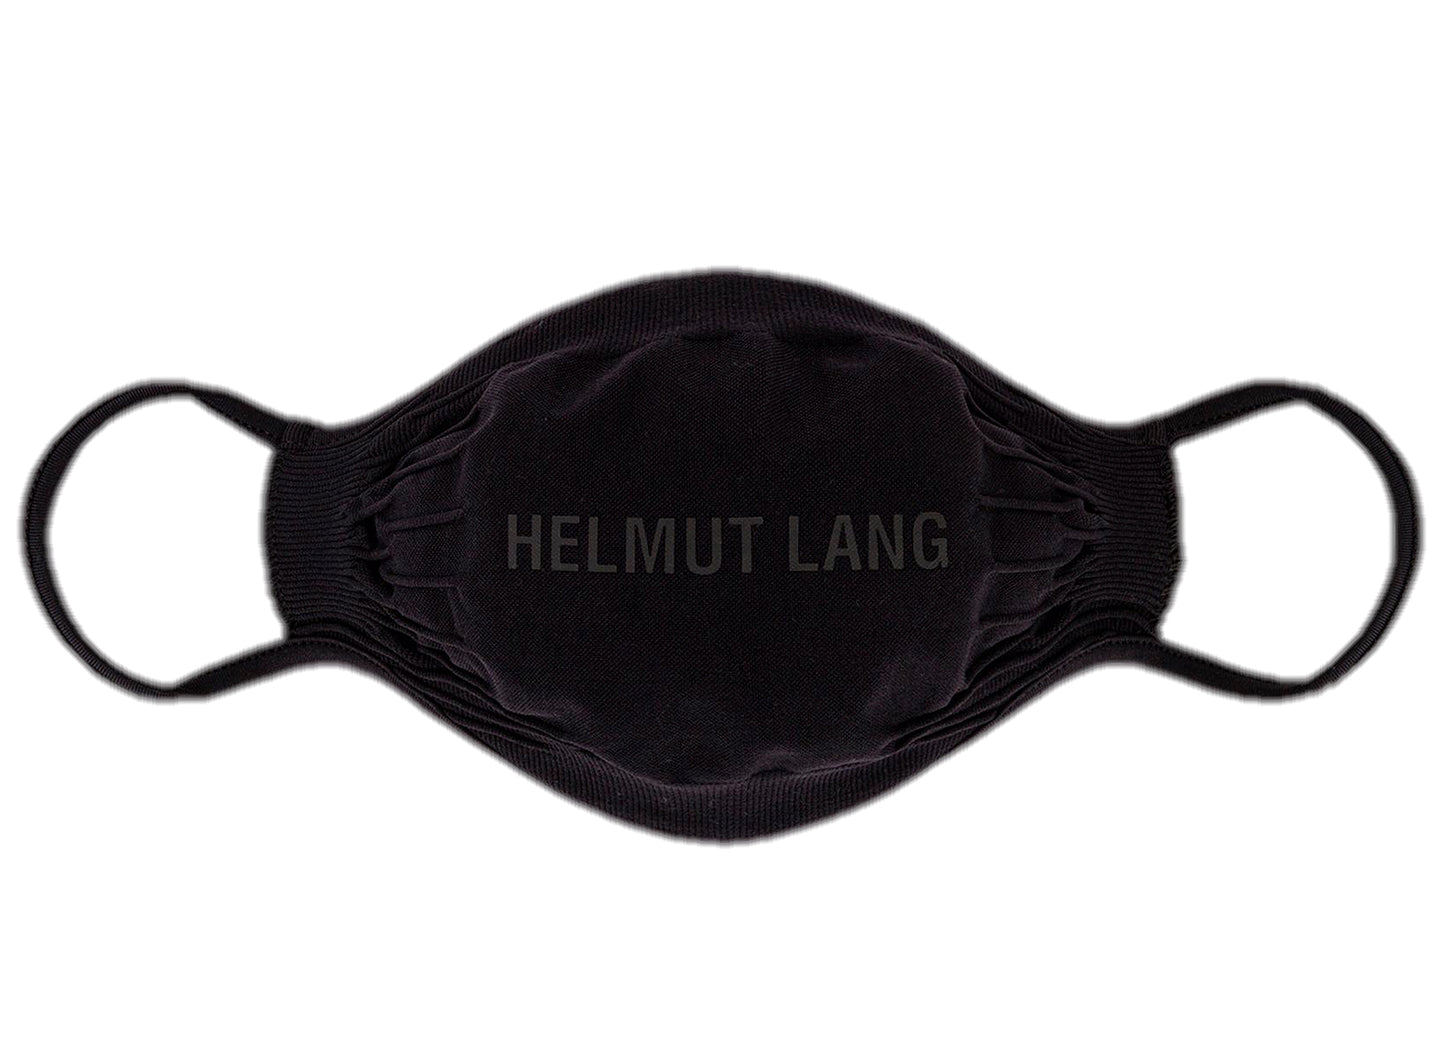 Helmut Lang Seamless Logo Mask